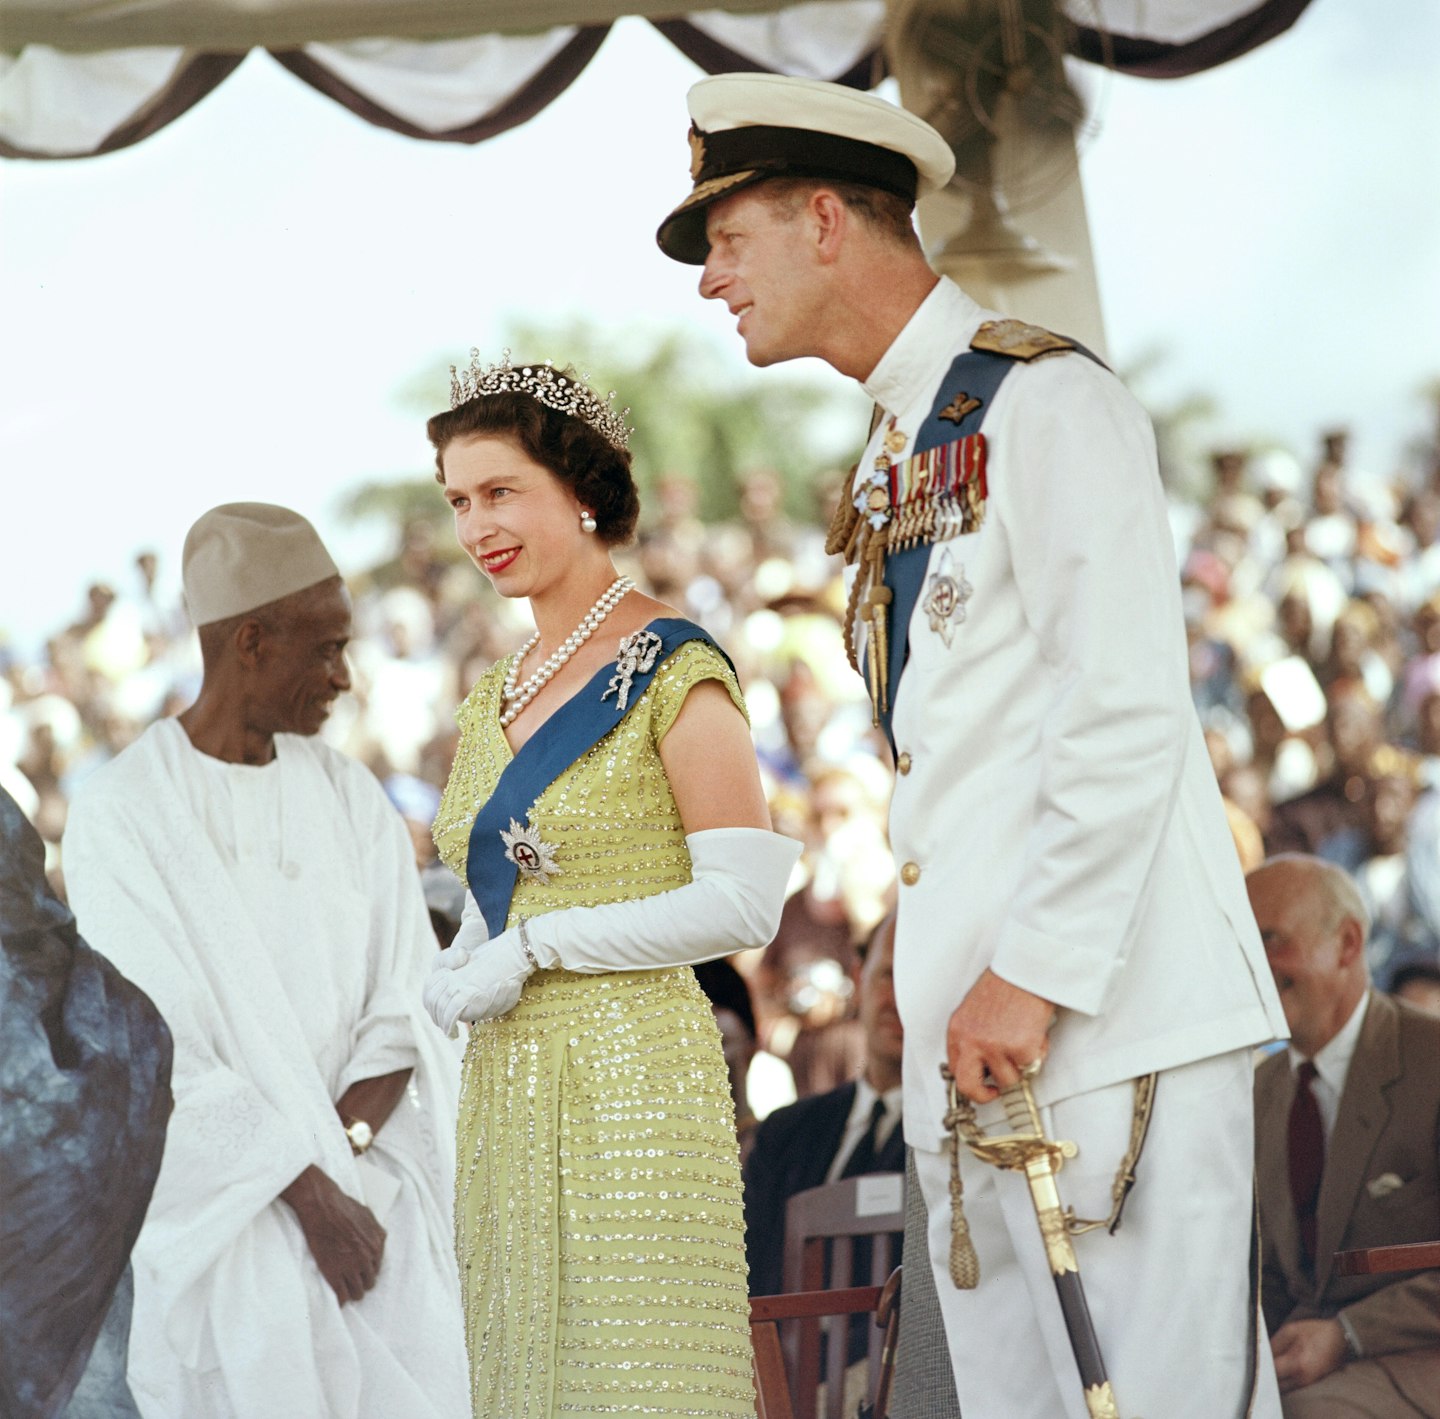 Queen Elizabeth II with her husband Prince Philip inSierra Leone